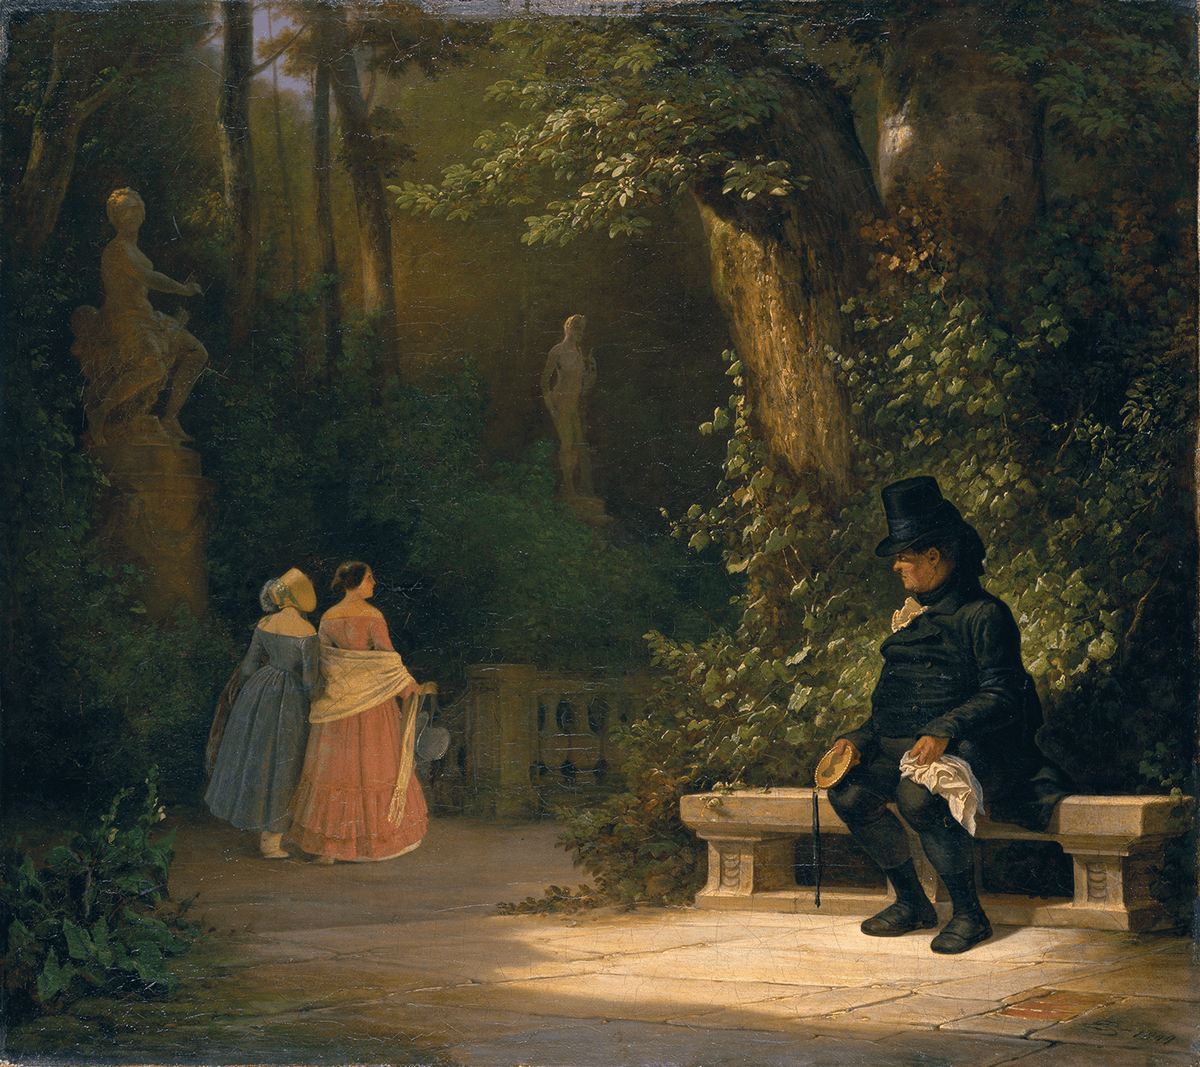 "The Widower," 1844, by Carl Spitzweg. Oil on canvas. Städel Musuem, Frankfurt. (Public Domain)